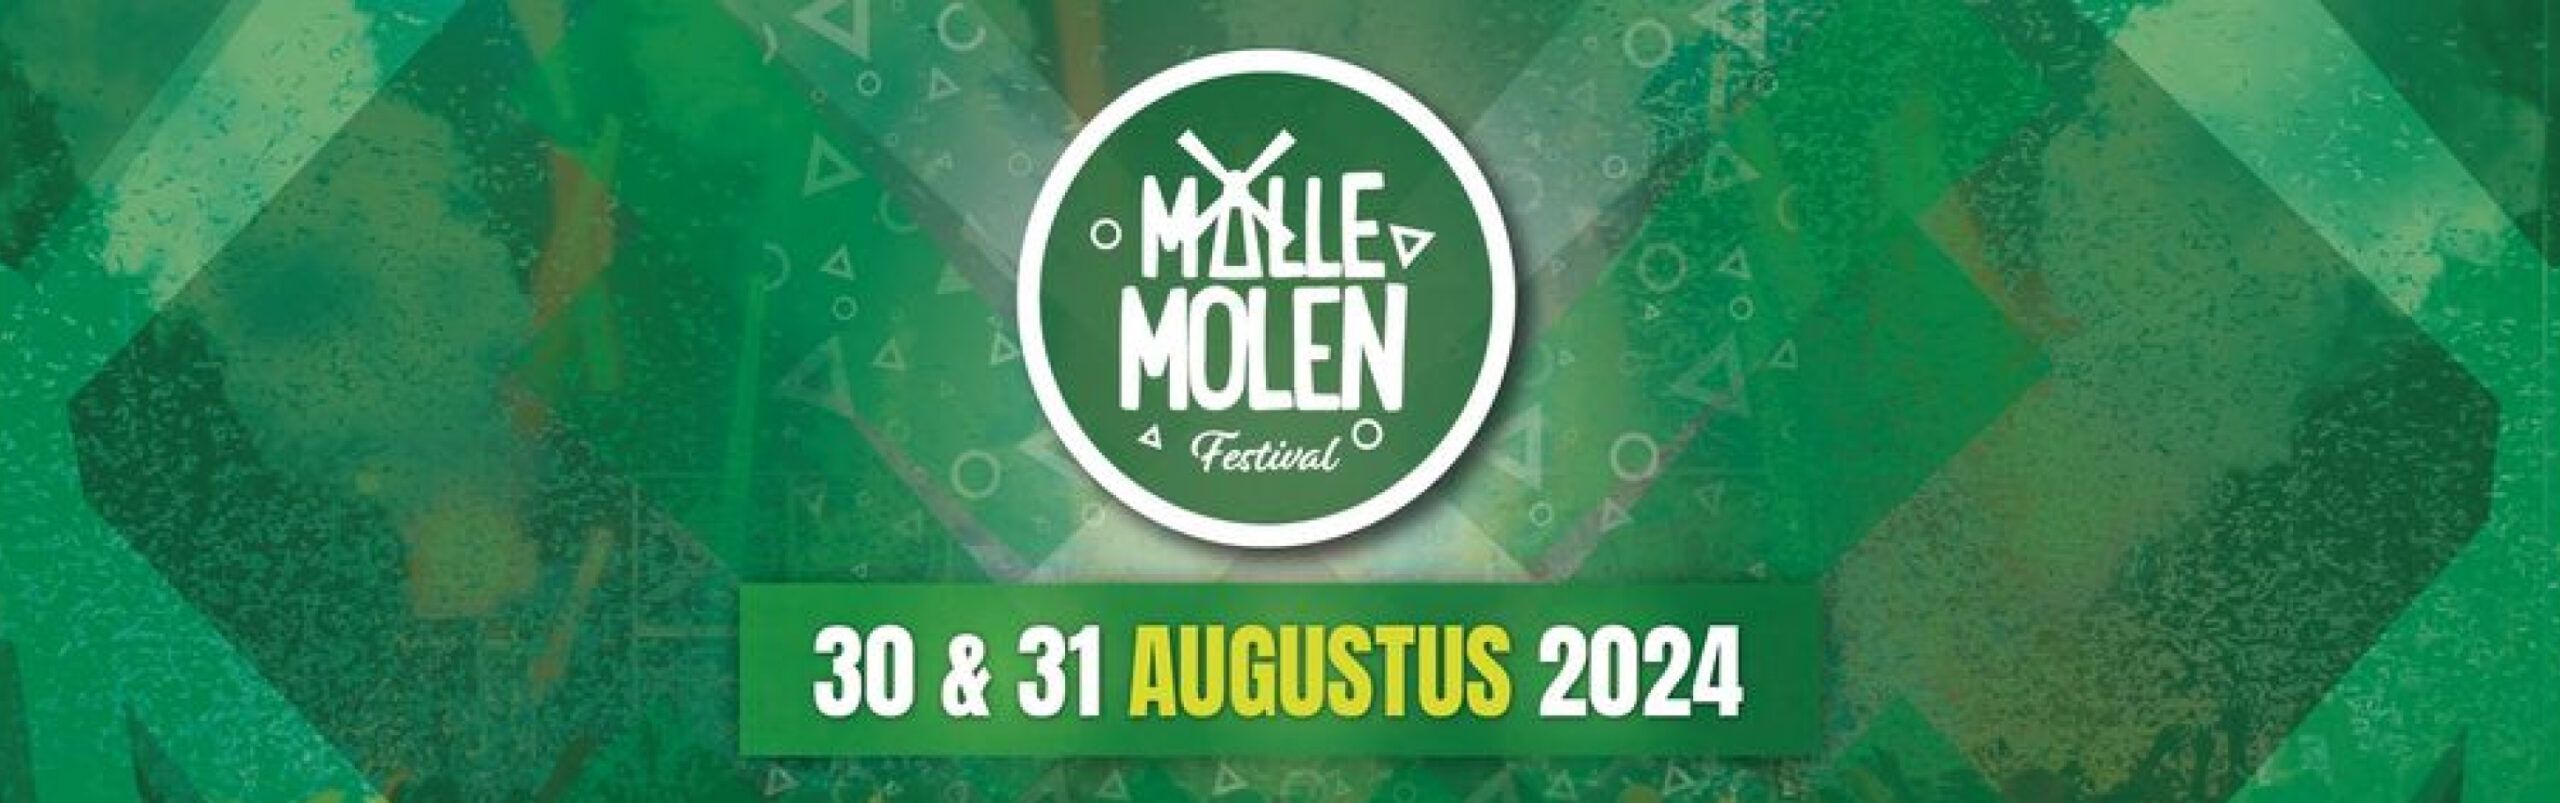 Malle Molen Festival header